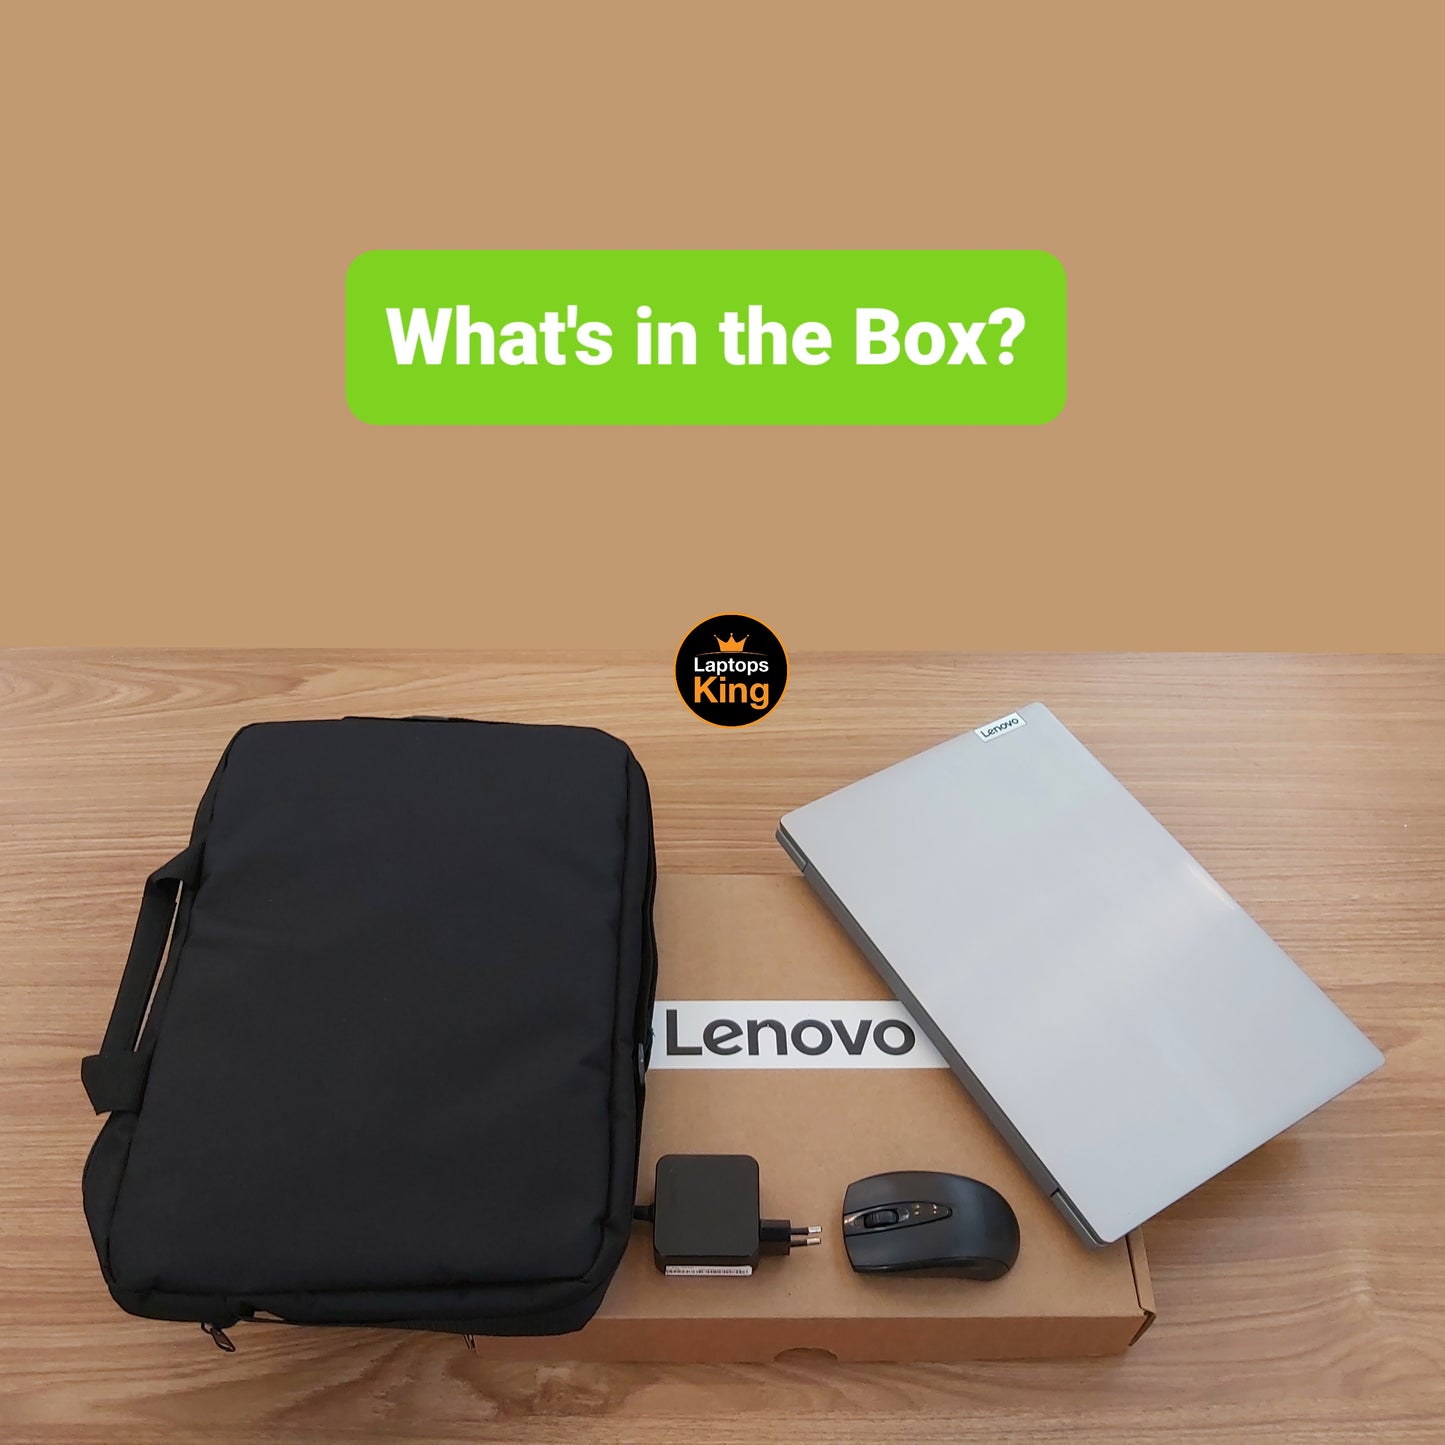 Lenovo IdeaPad L3 81y3 i5-10210u Laptop (Used Very Clean)